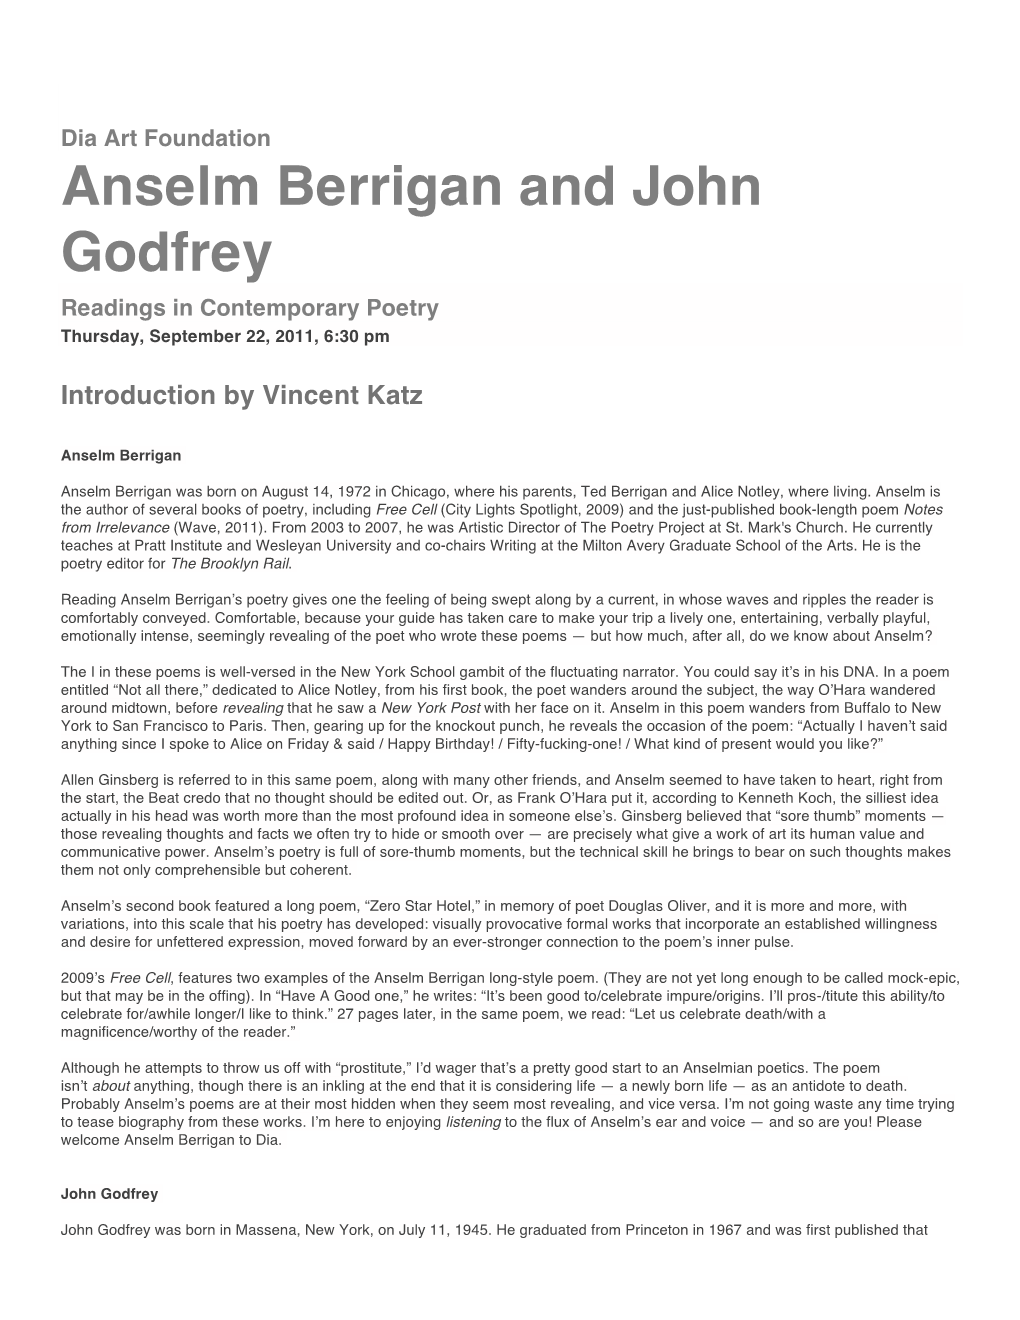 Anselm Berrigan and John Godfrey Readings in Contemporary Poetry Thursday, September 22, 2011, 6:30 Pm